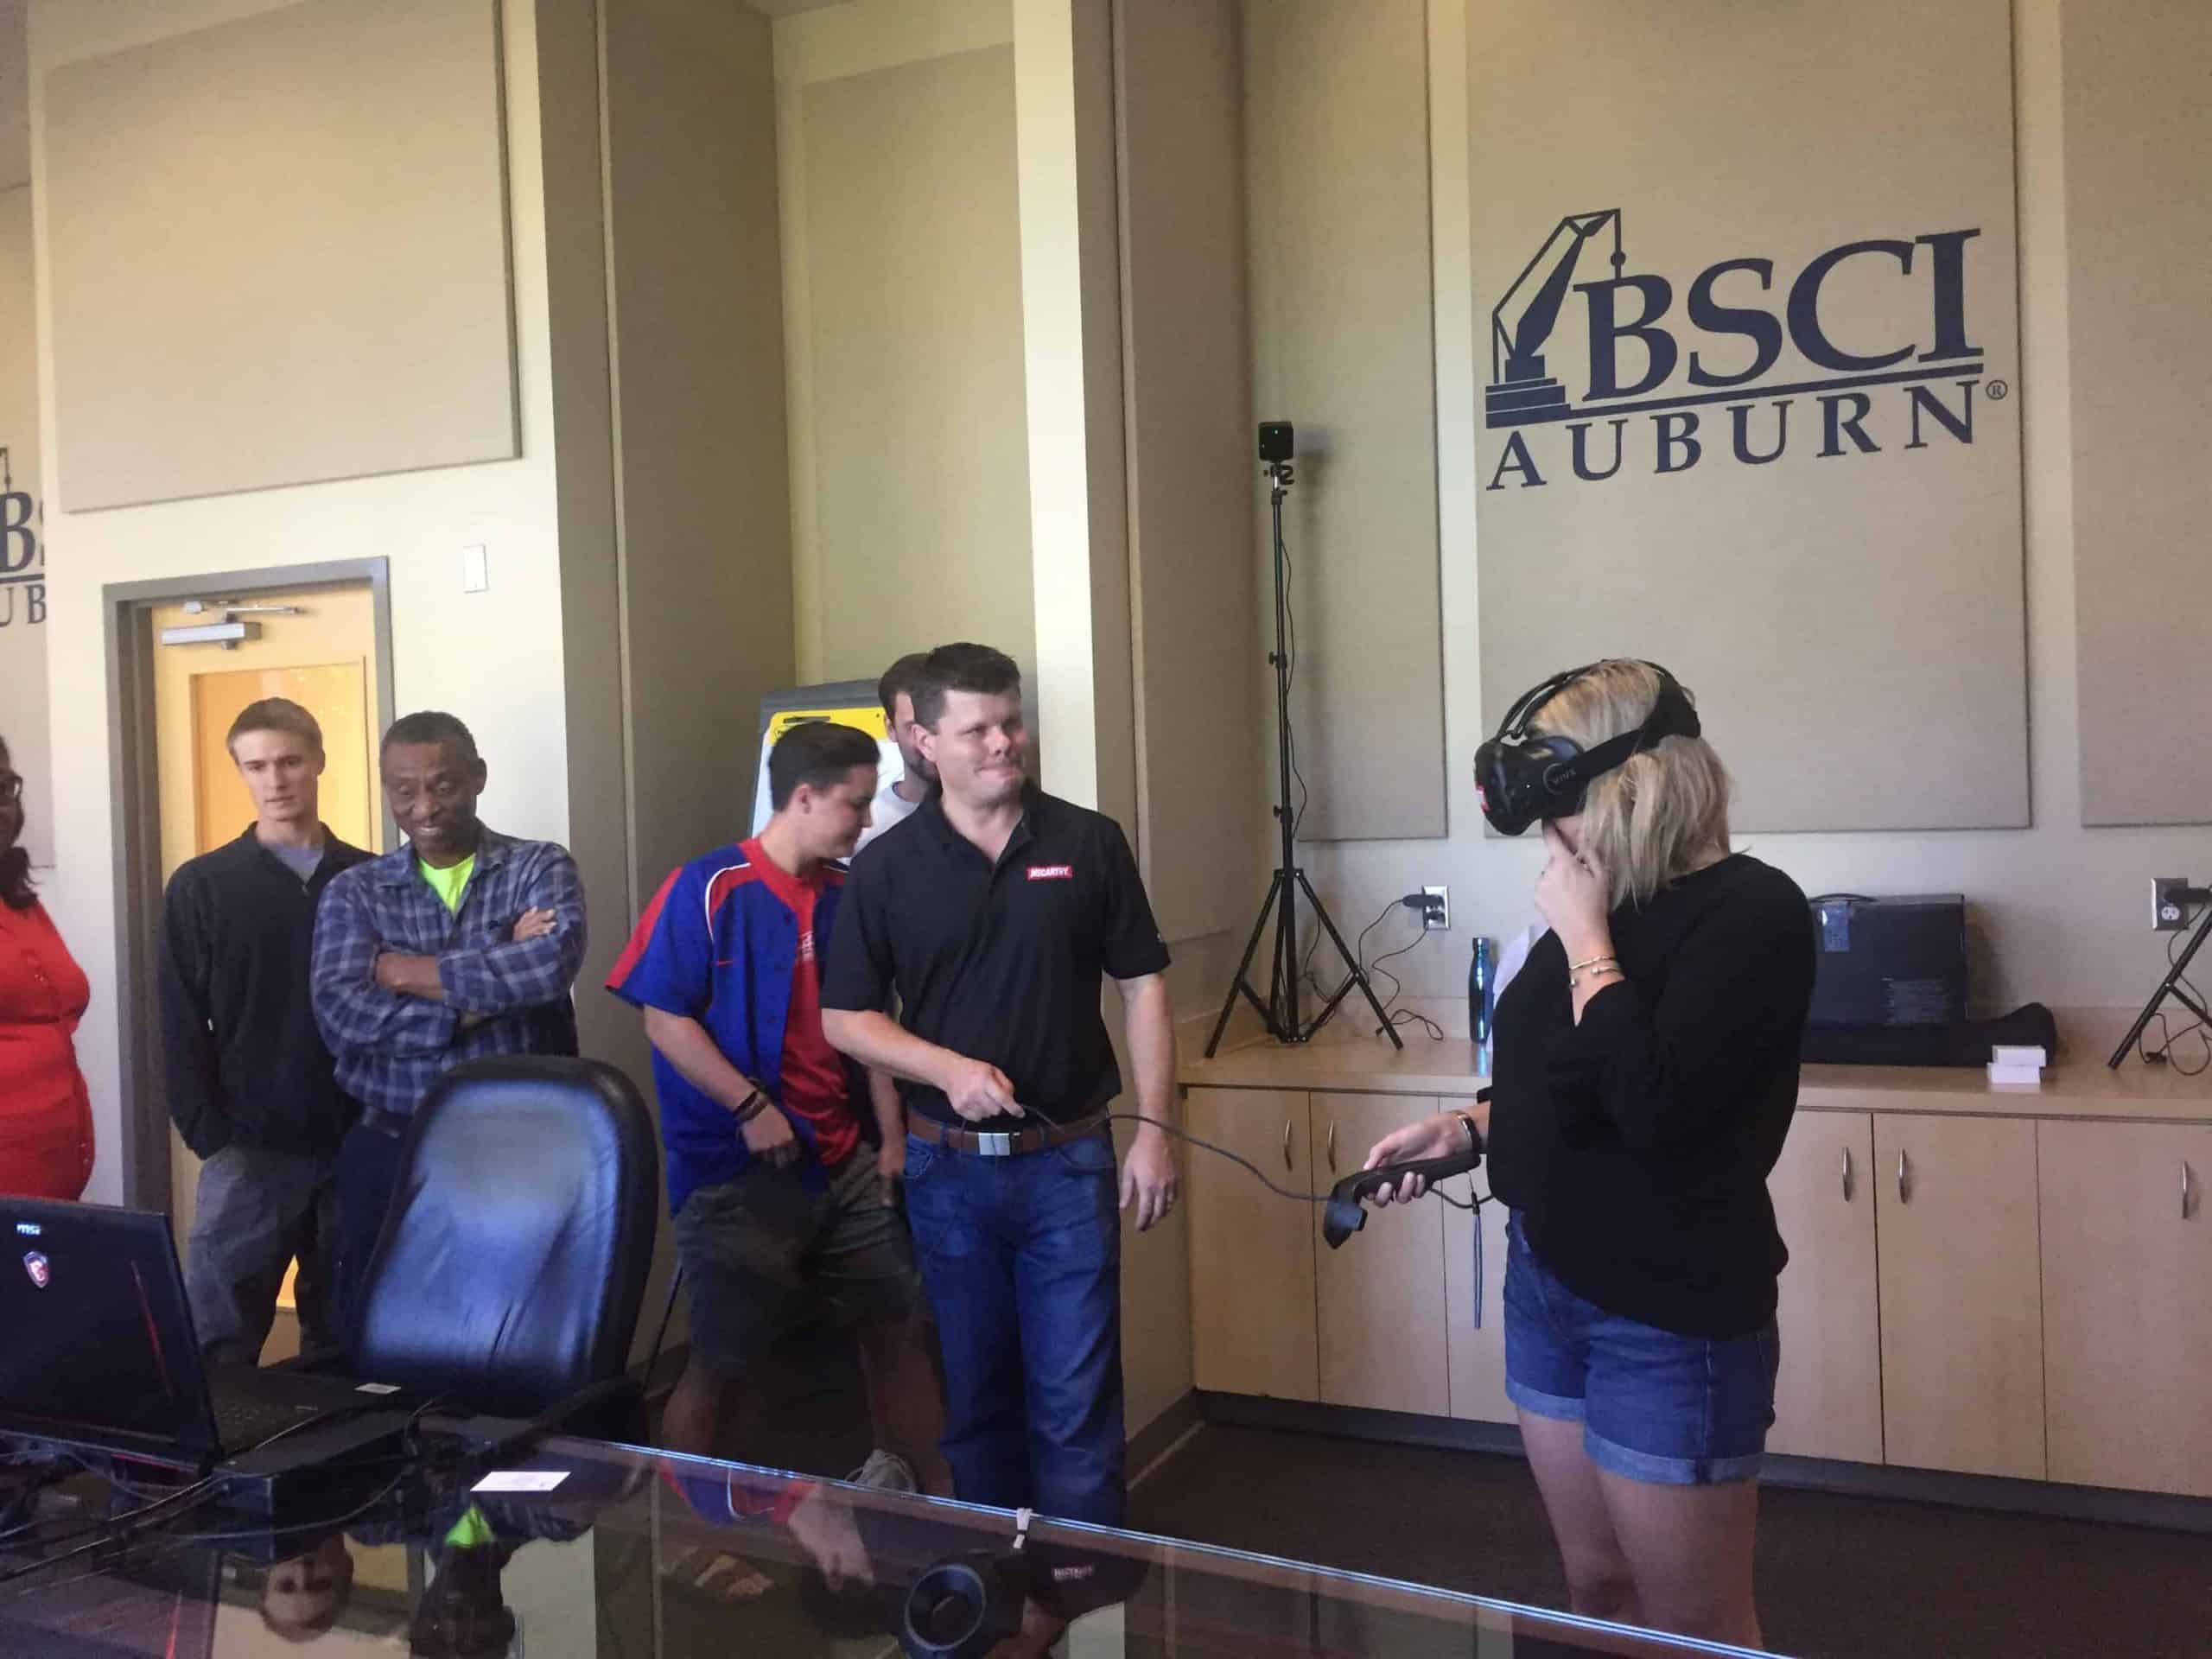 MBC Graduate Students testing VR equipment